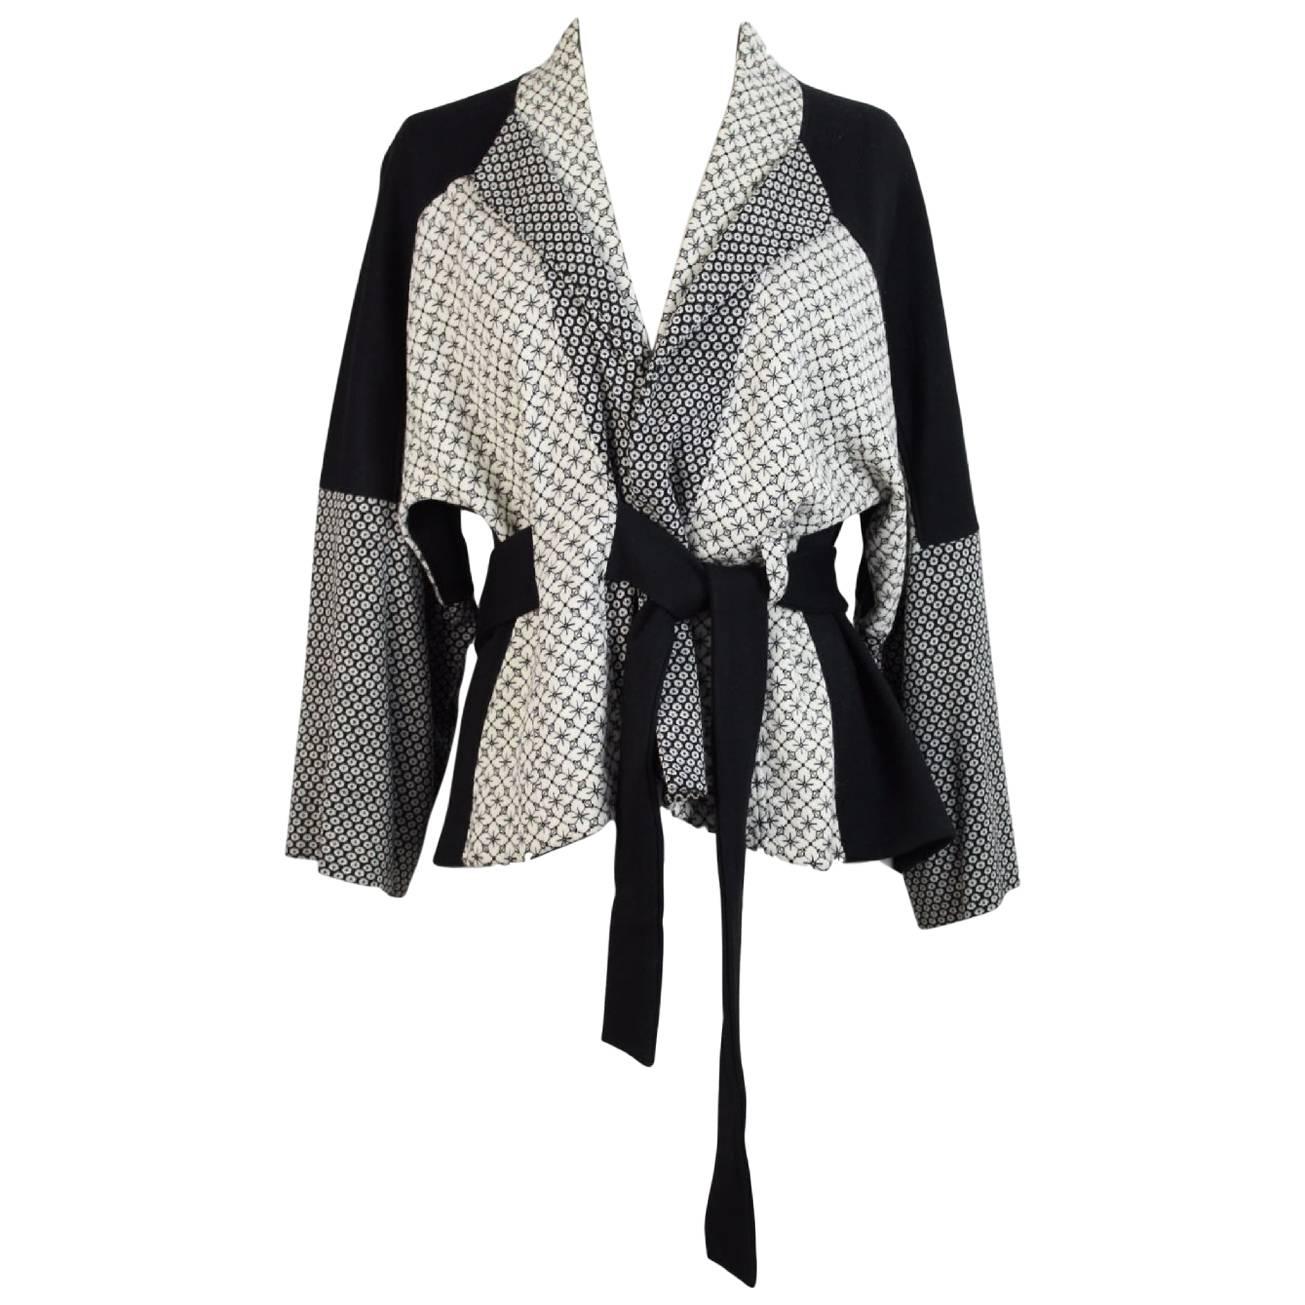 Kenzo black white wool sweater jacket kimono women’s size M made italy 1990s